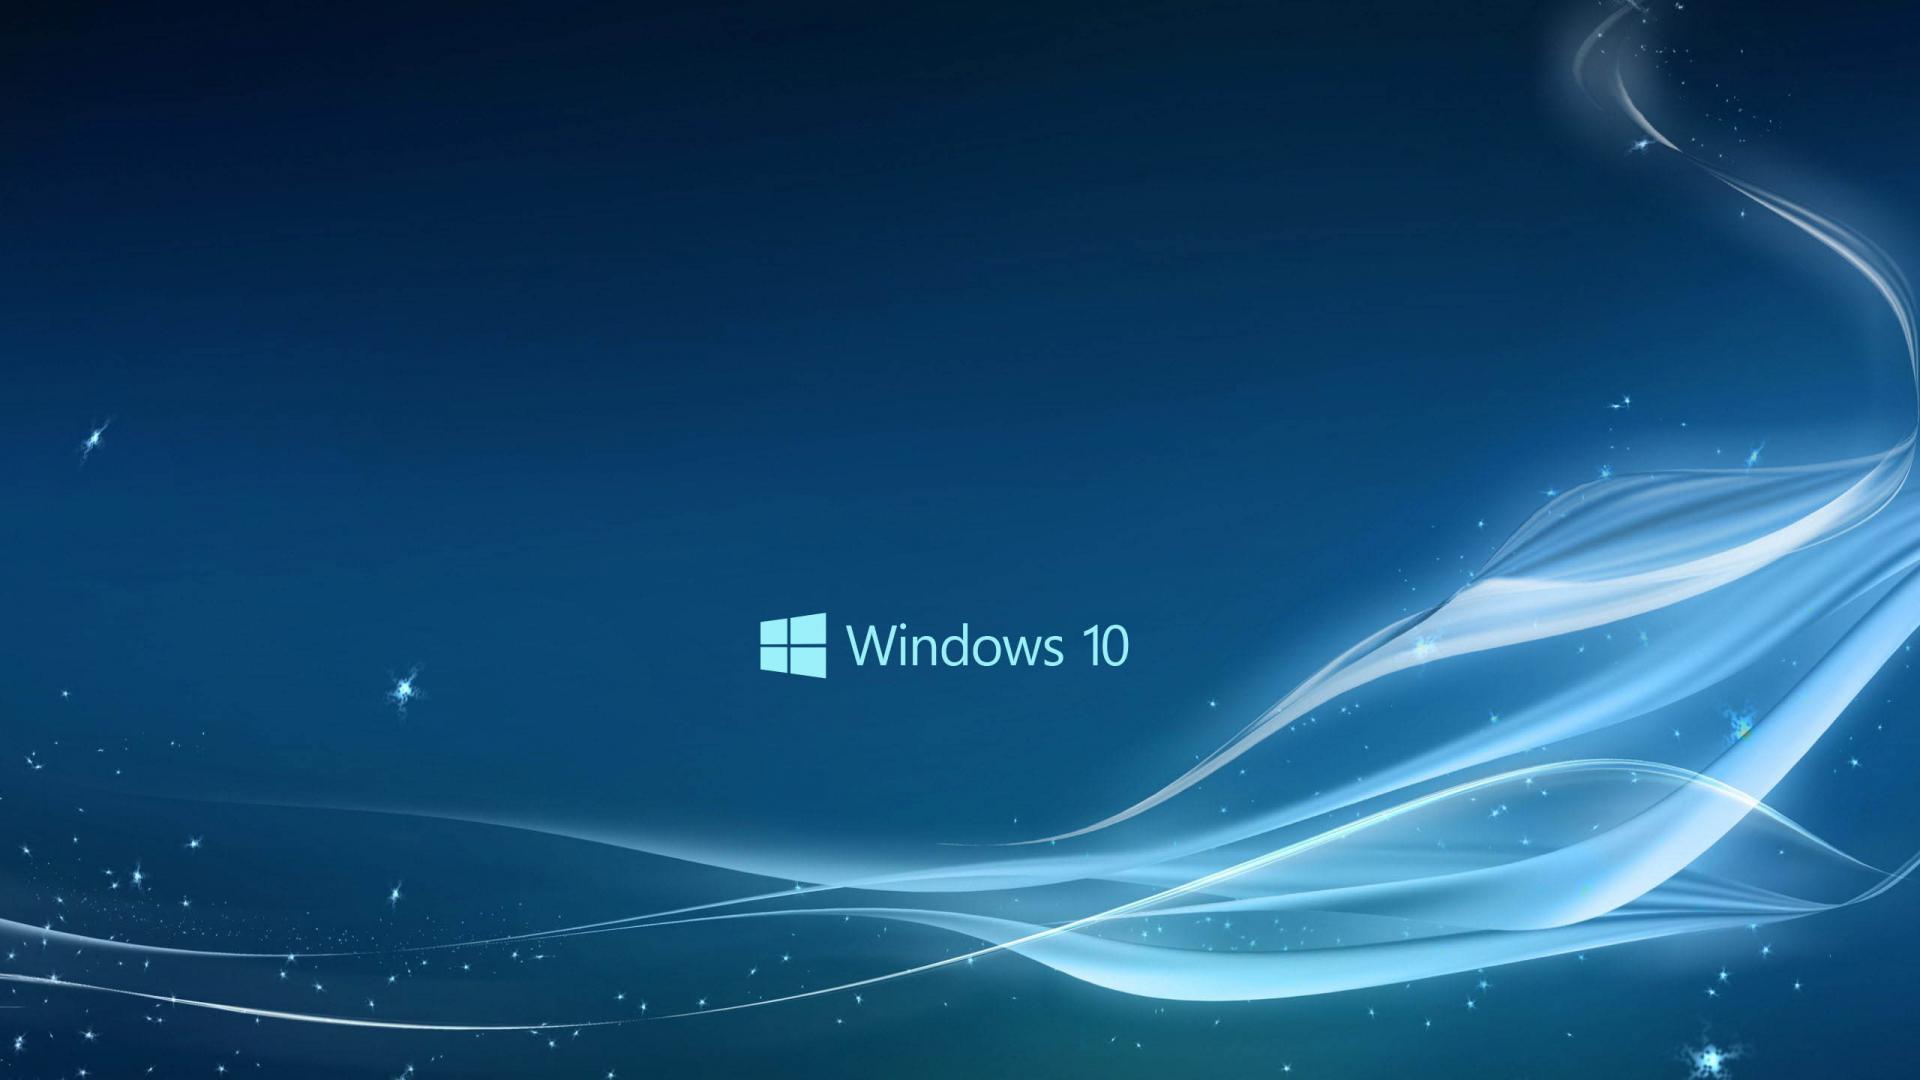 44+] Windows 10 Desktop Wallpaper 1920 x 1080 - WallpaperSafari